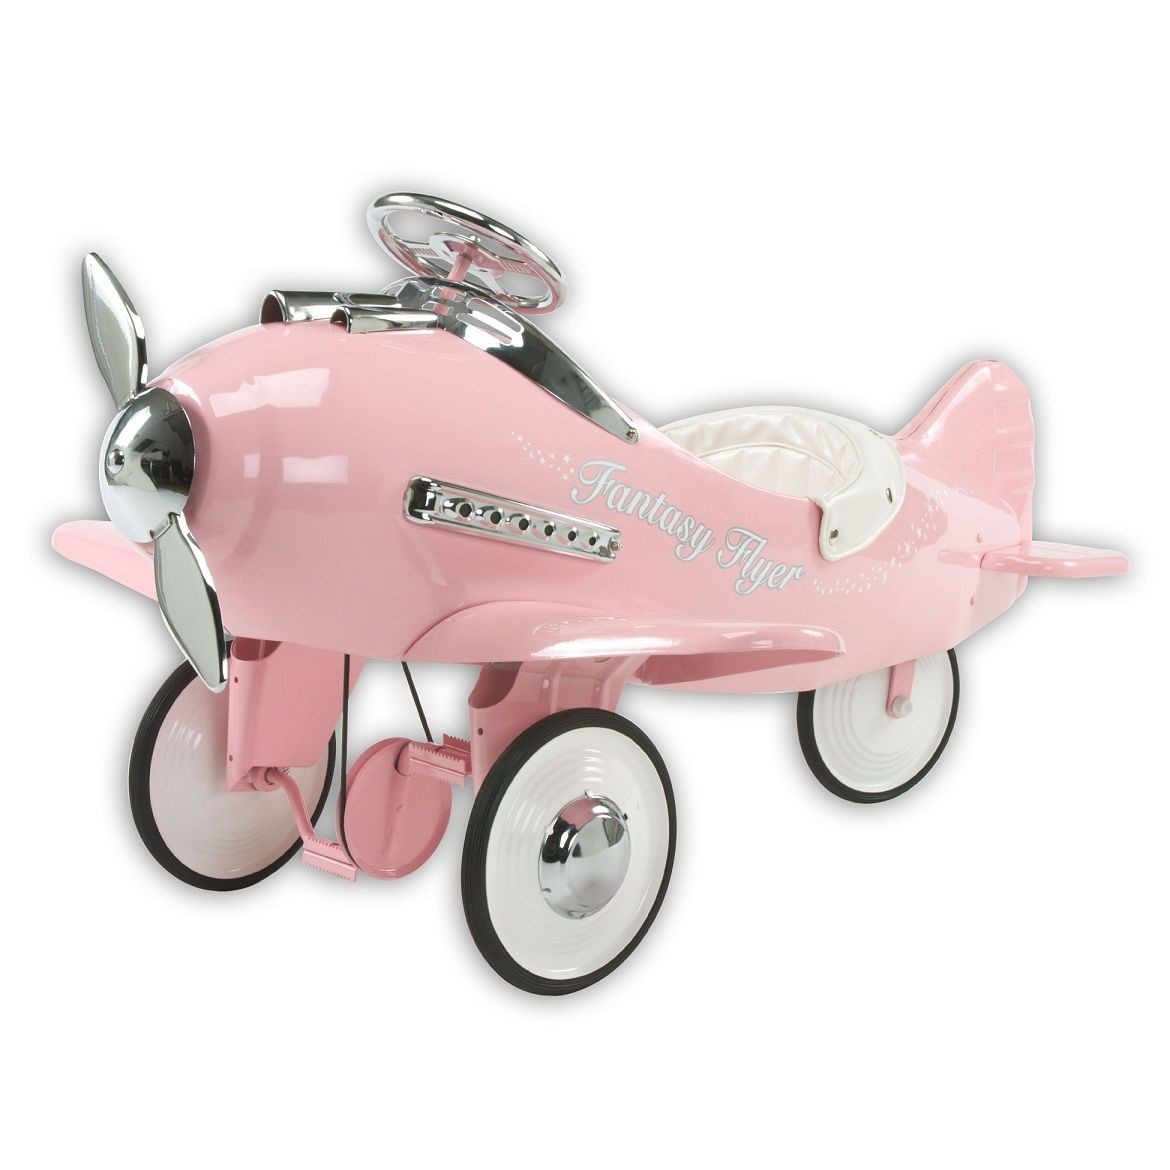 Fantasy flyer pink pedal plane retro airplane ride on toy